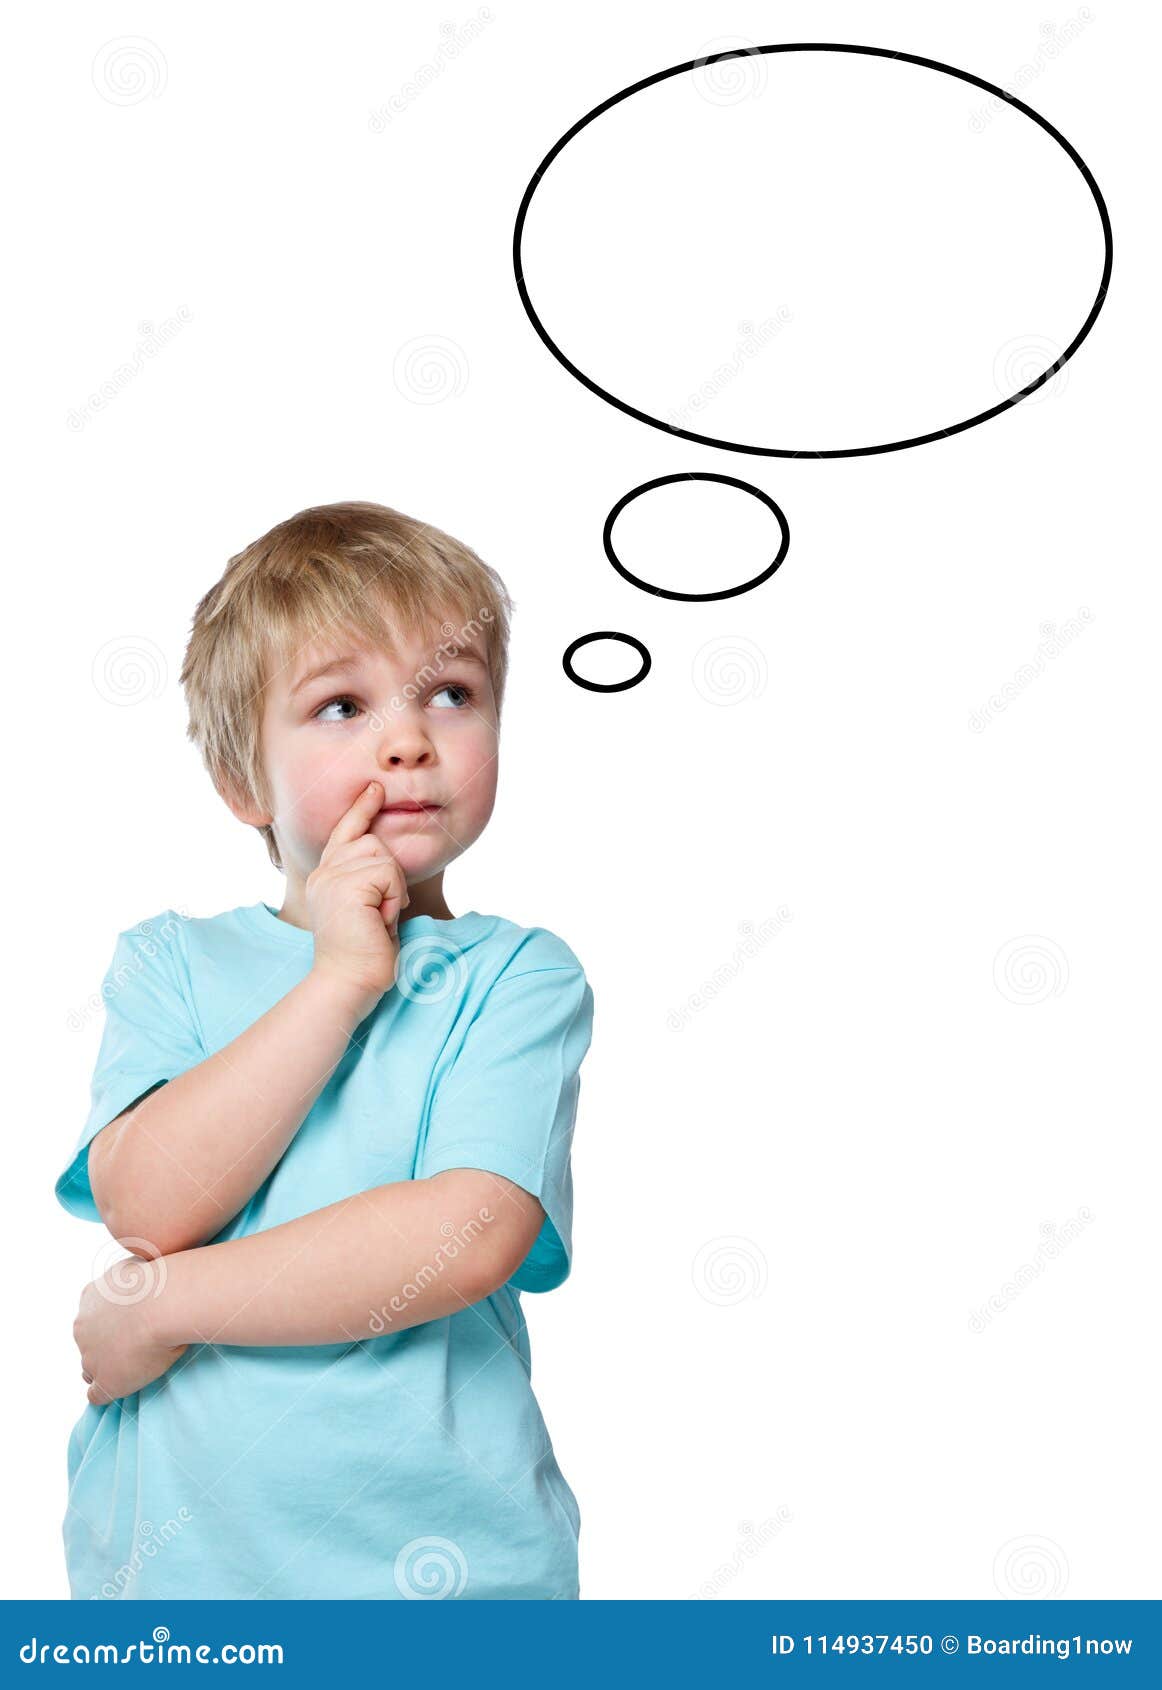 child kid little boy think thinking daydreaming speech bubble co